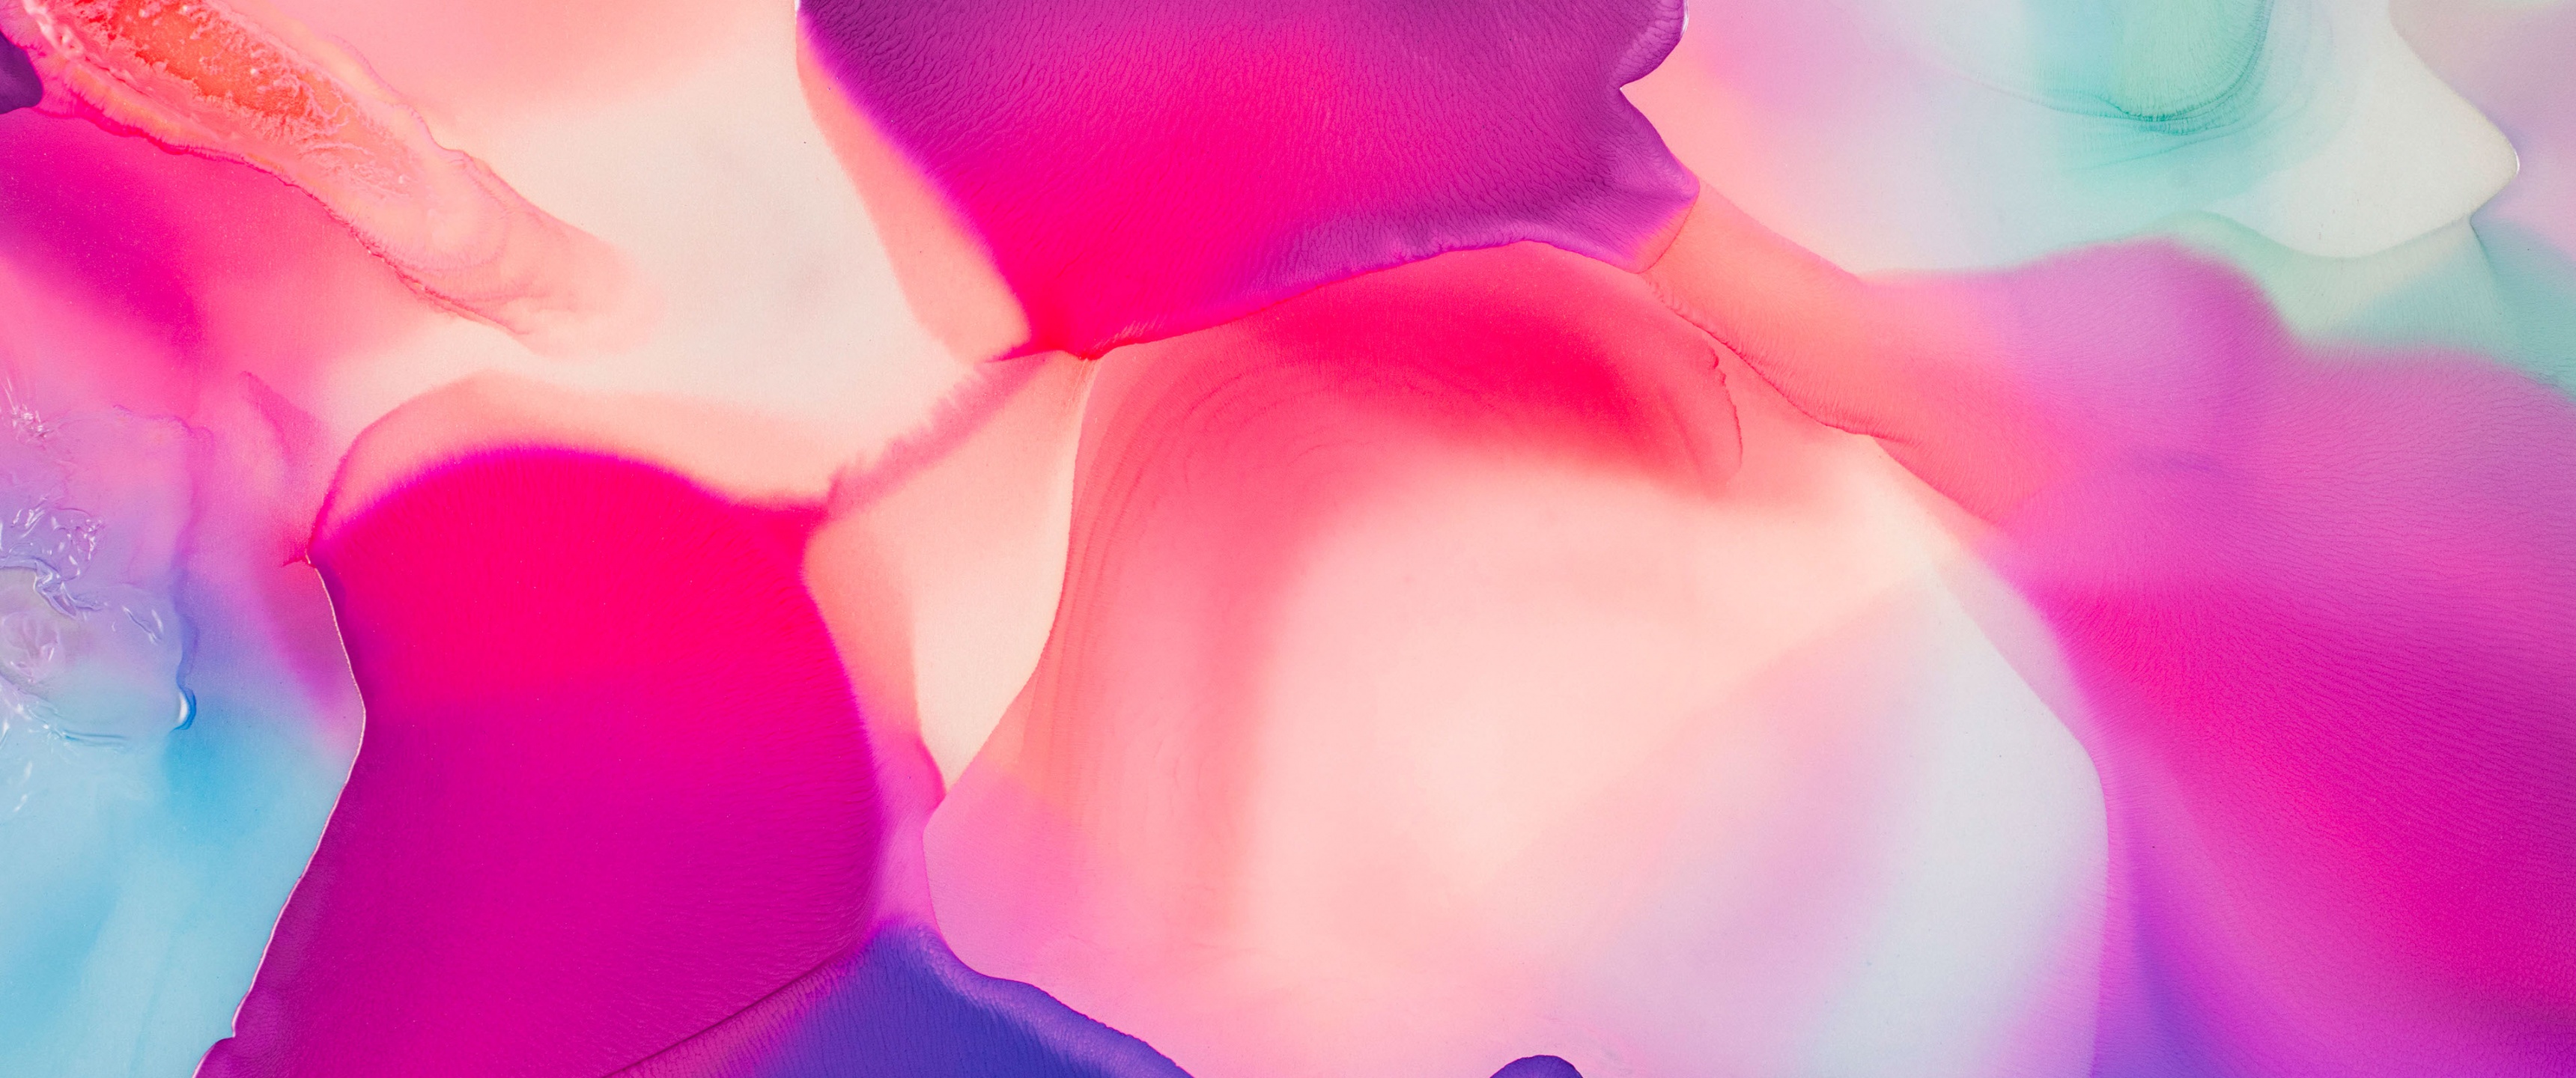 Liquid art Wallpaper 4K, Colorful, Fluid, Pink, Abstract, #1282